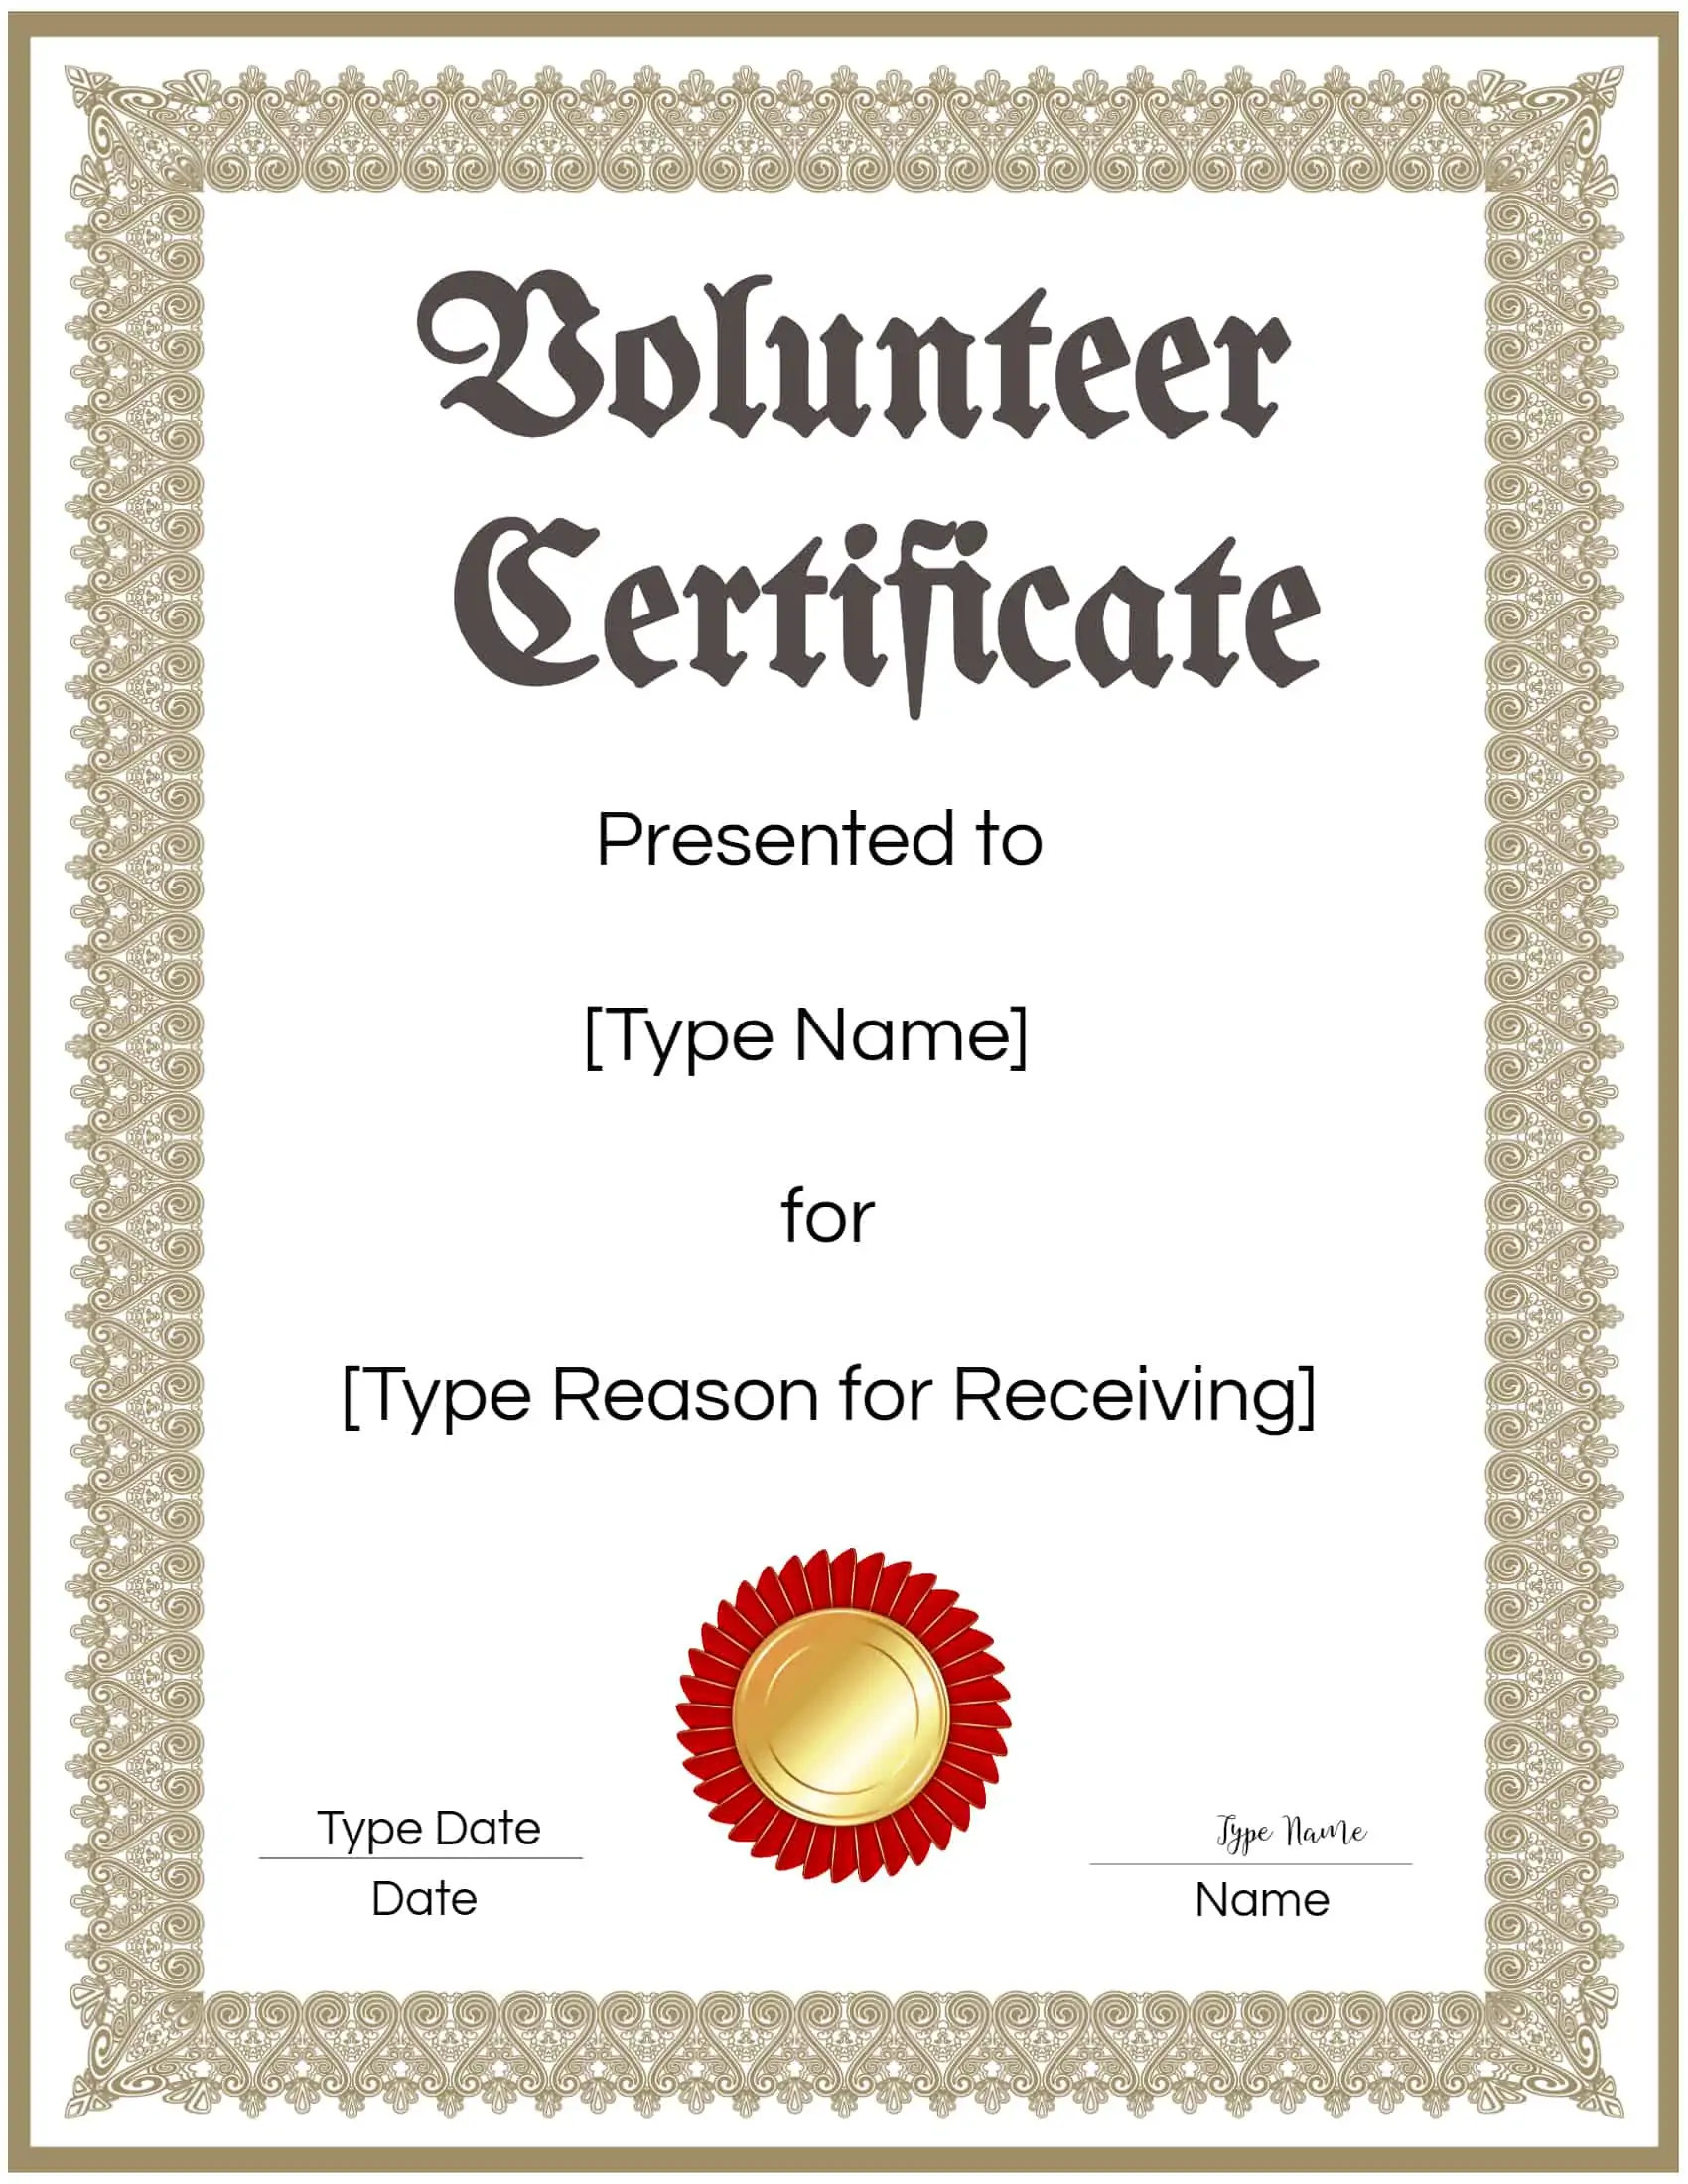 FREE Volunteer Certificate Template  Many Designs are Available For Volunteer Certificate Templates